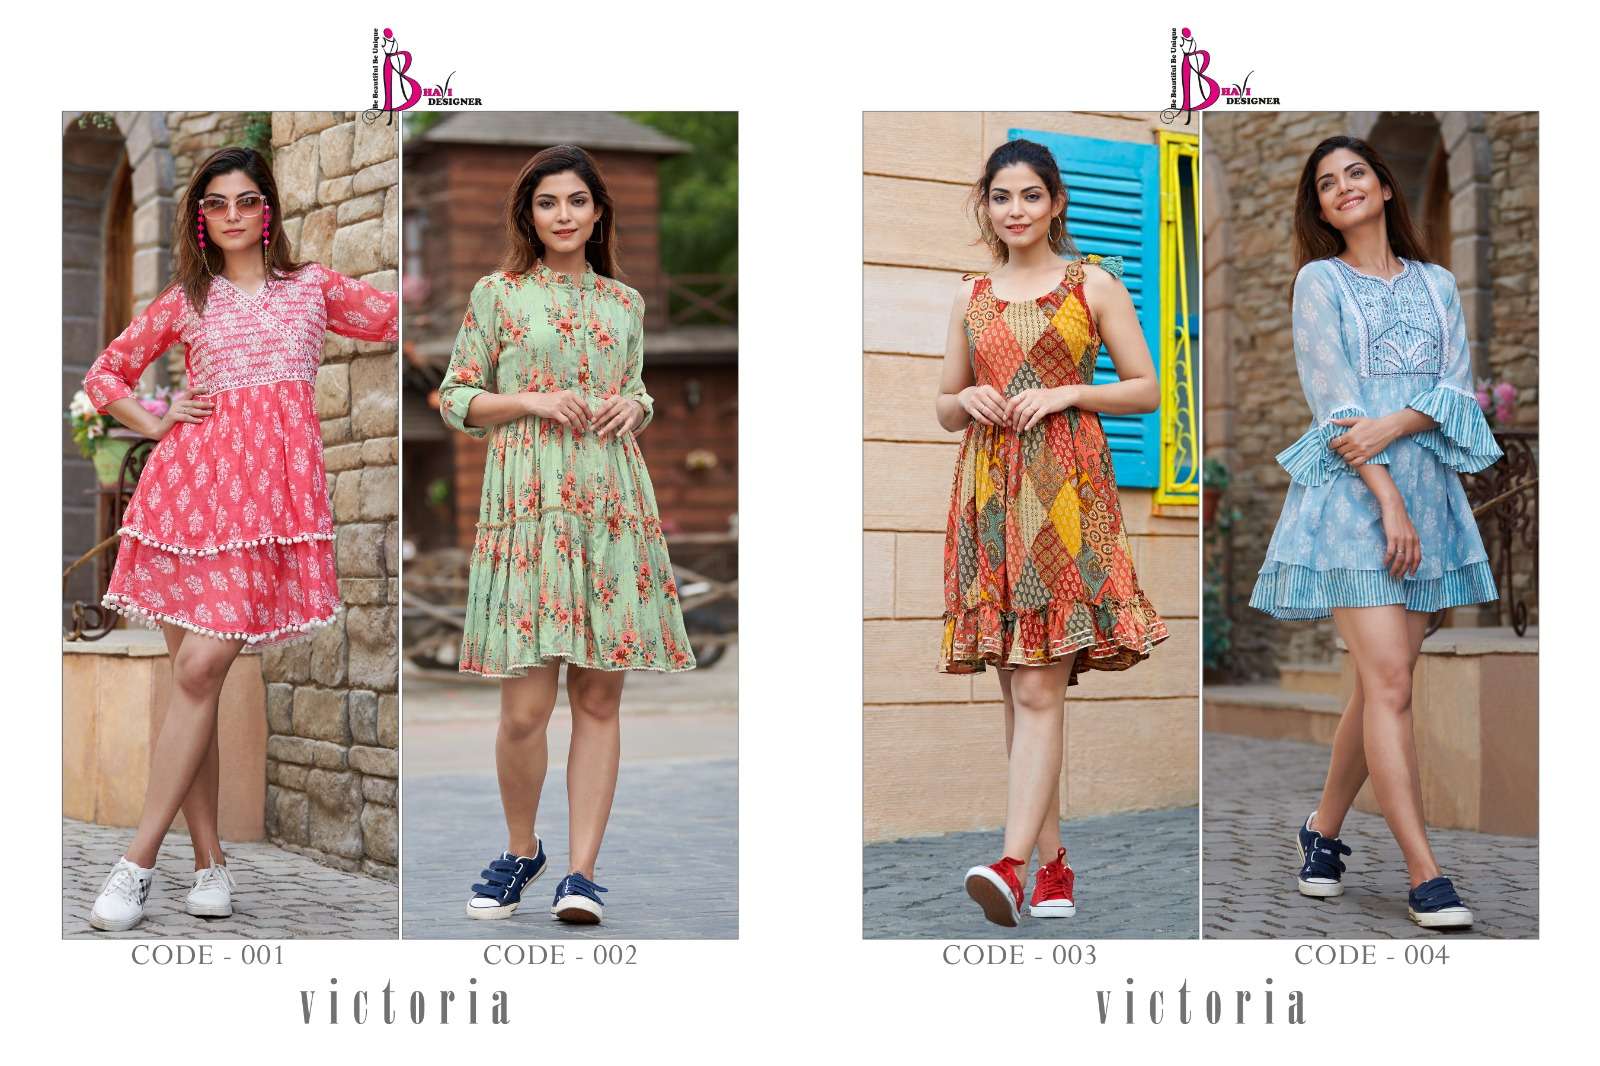 bhavi designer victoria fancy designer shorts tops catalogue wholesaler surat